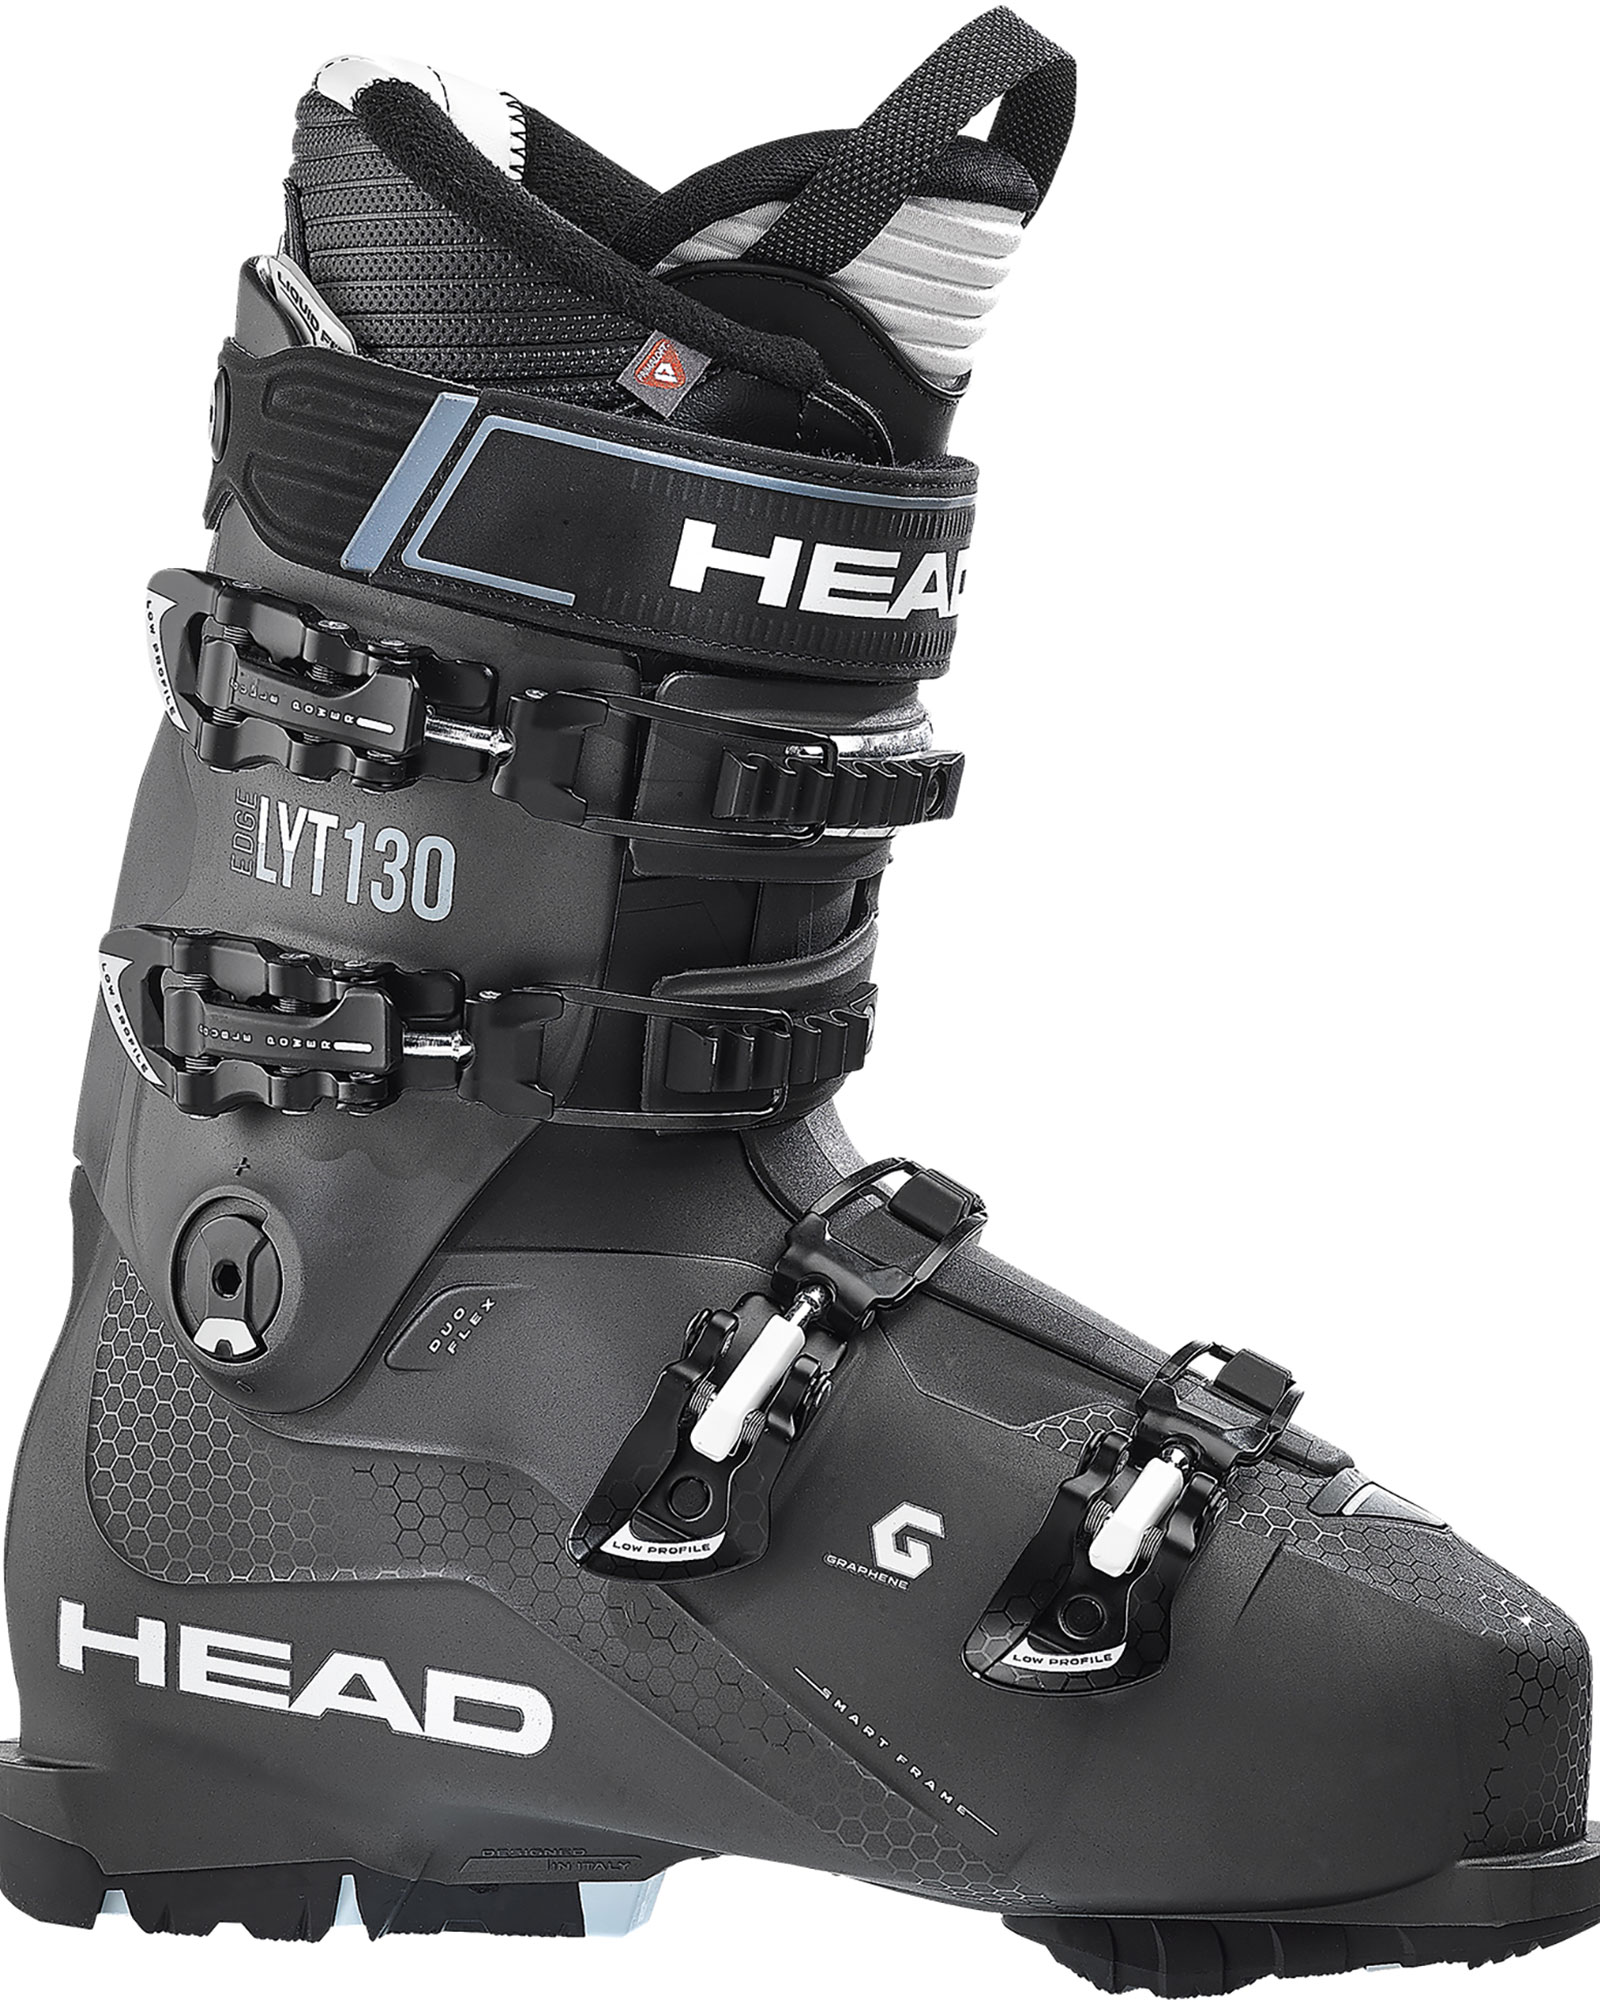 Head Edge Lyt 130 GW Men’s Ski Boots 2023 - Anthracite MP 25.5